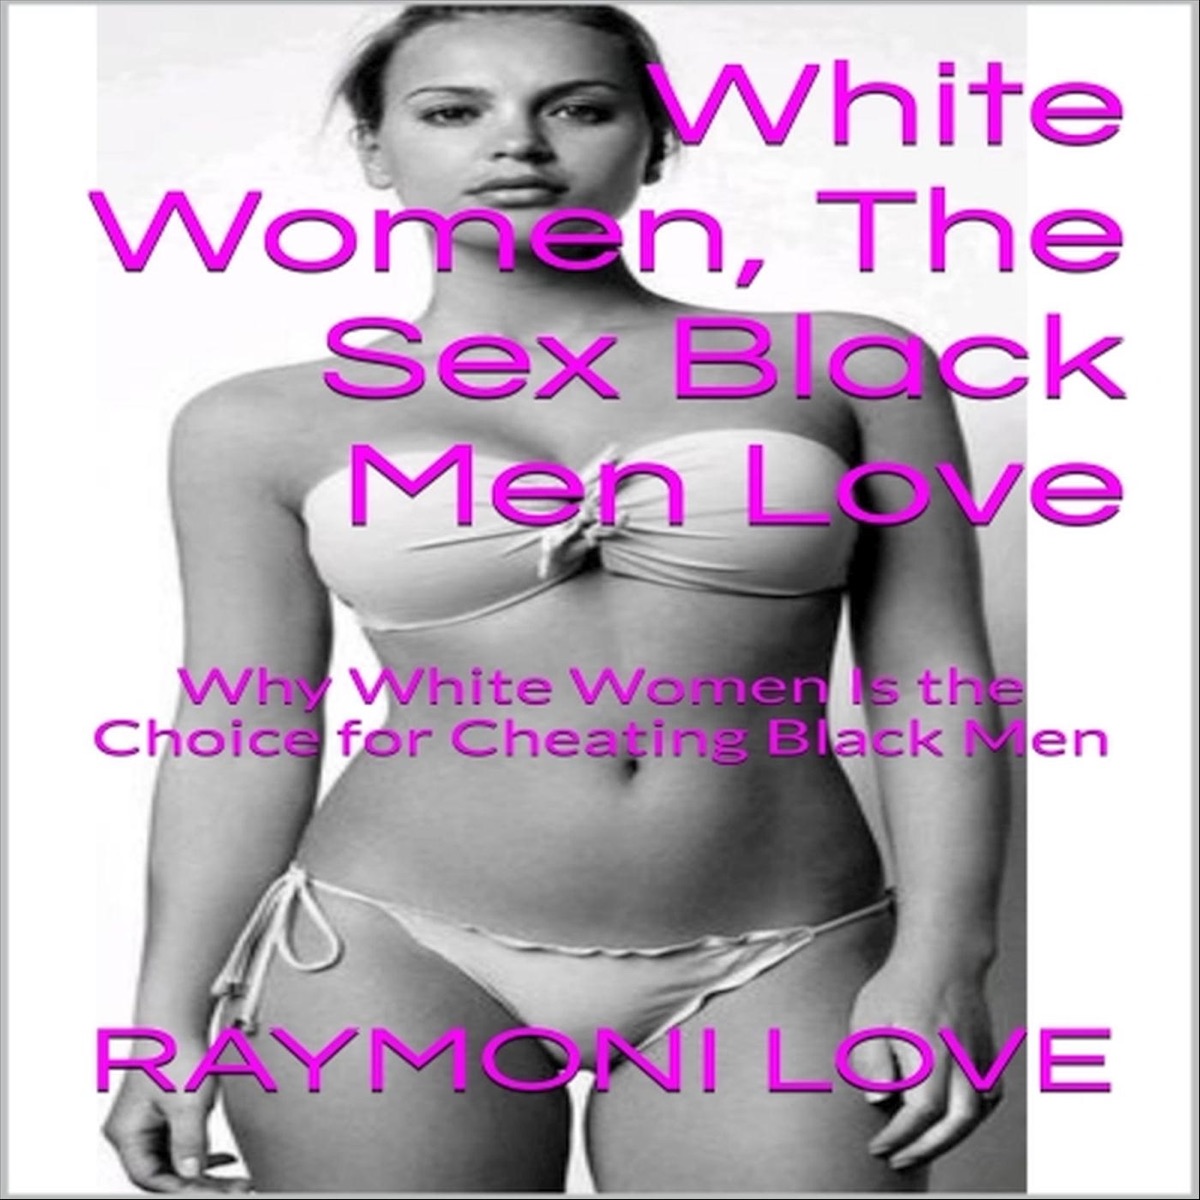 White Women, The Sex Black Men Love (Why White Women Is the Choice for Cheating Black Men) - EP - Album by Raymoni Love